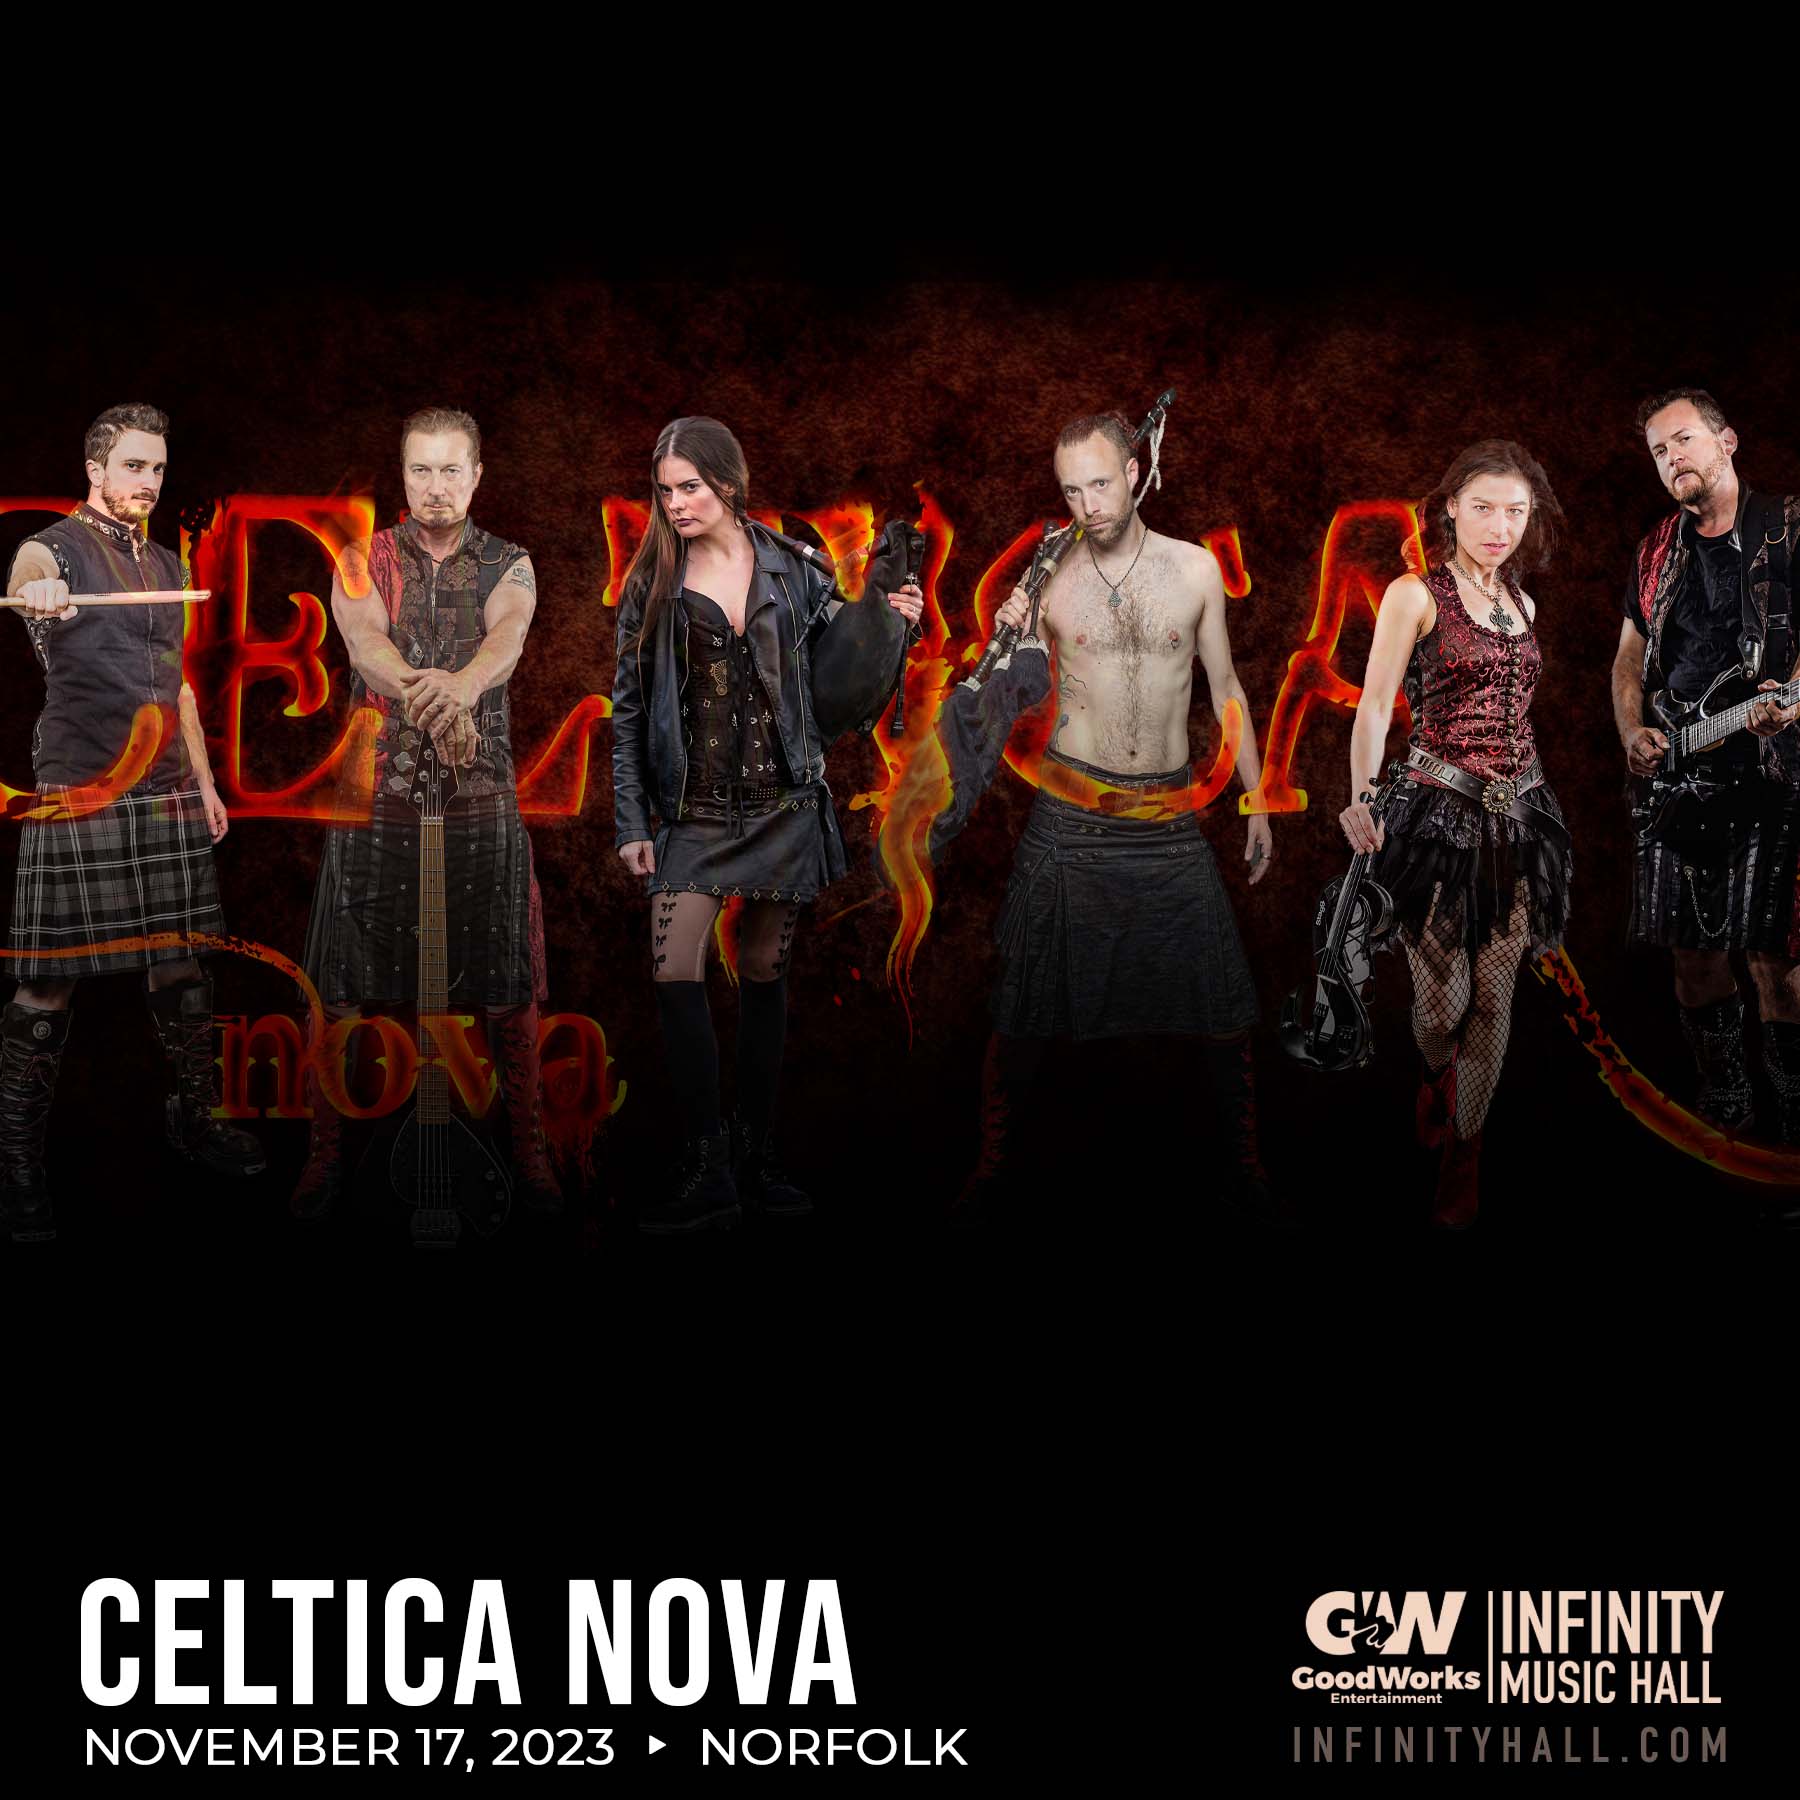 Buy Tickets to Celtica Nova in Norfolk on Nov 17, 2023